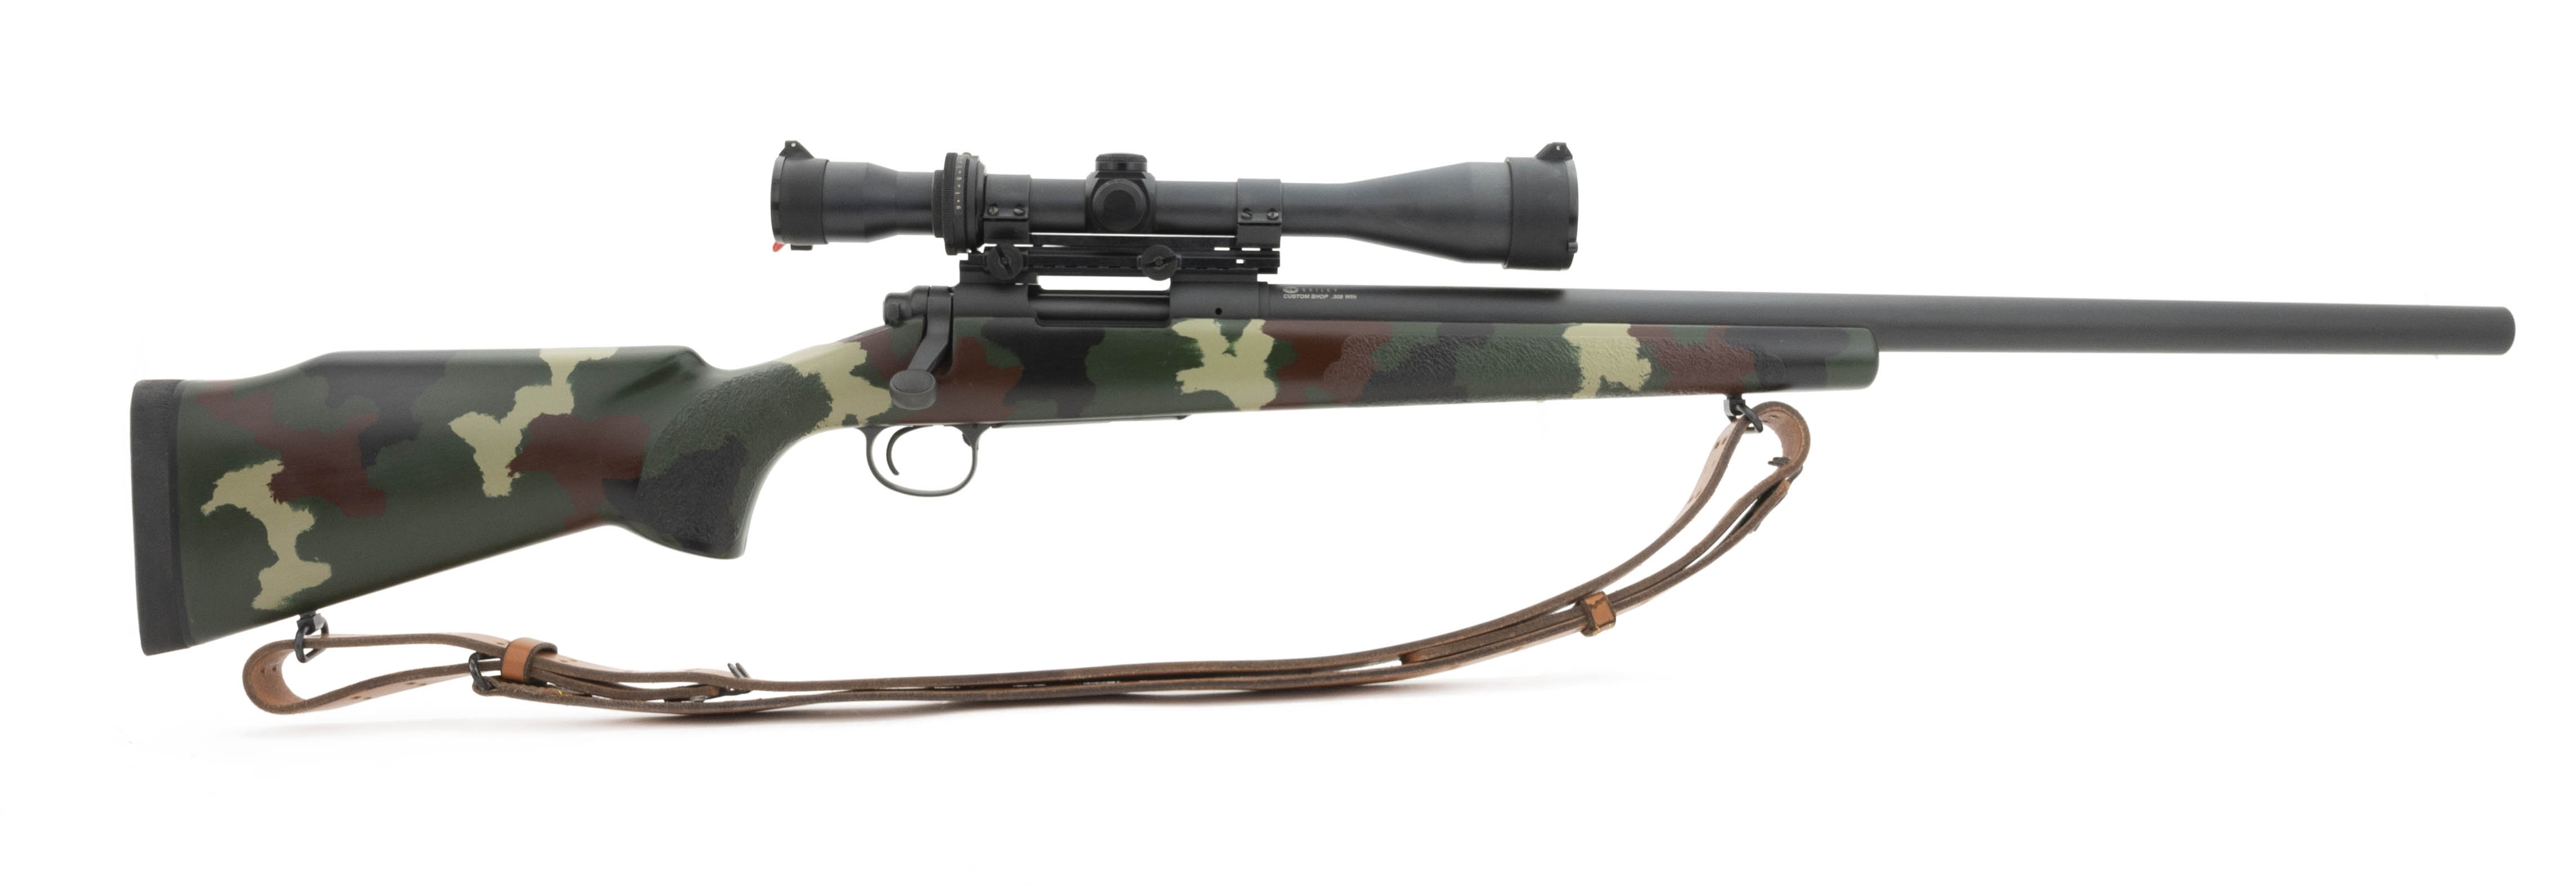 Remington 700 Sniper Stock. 